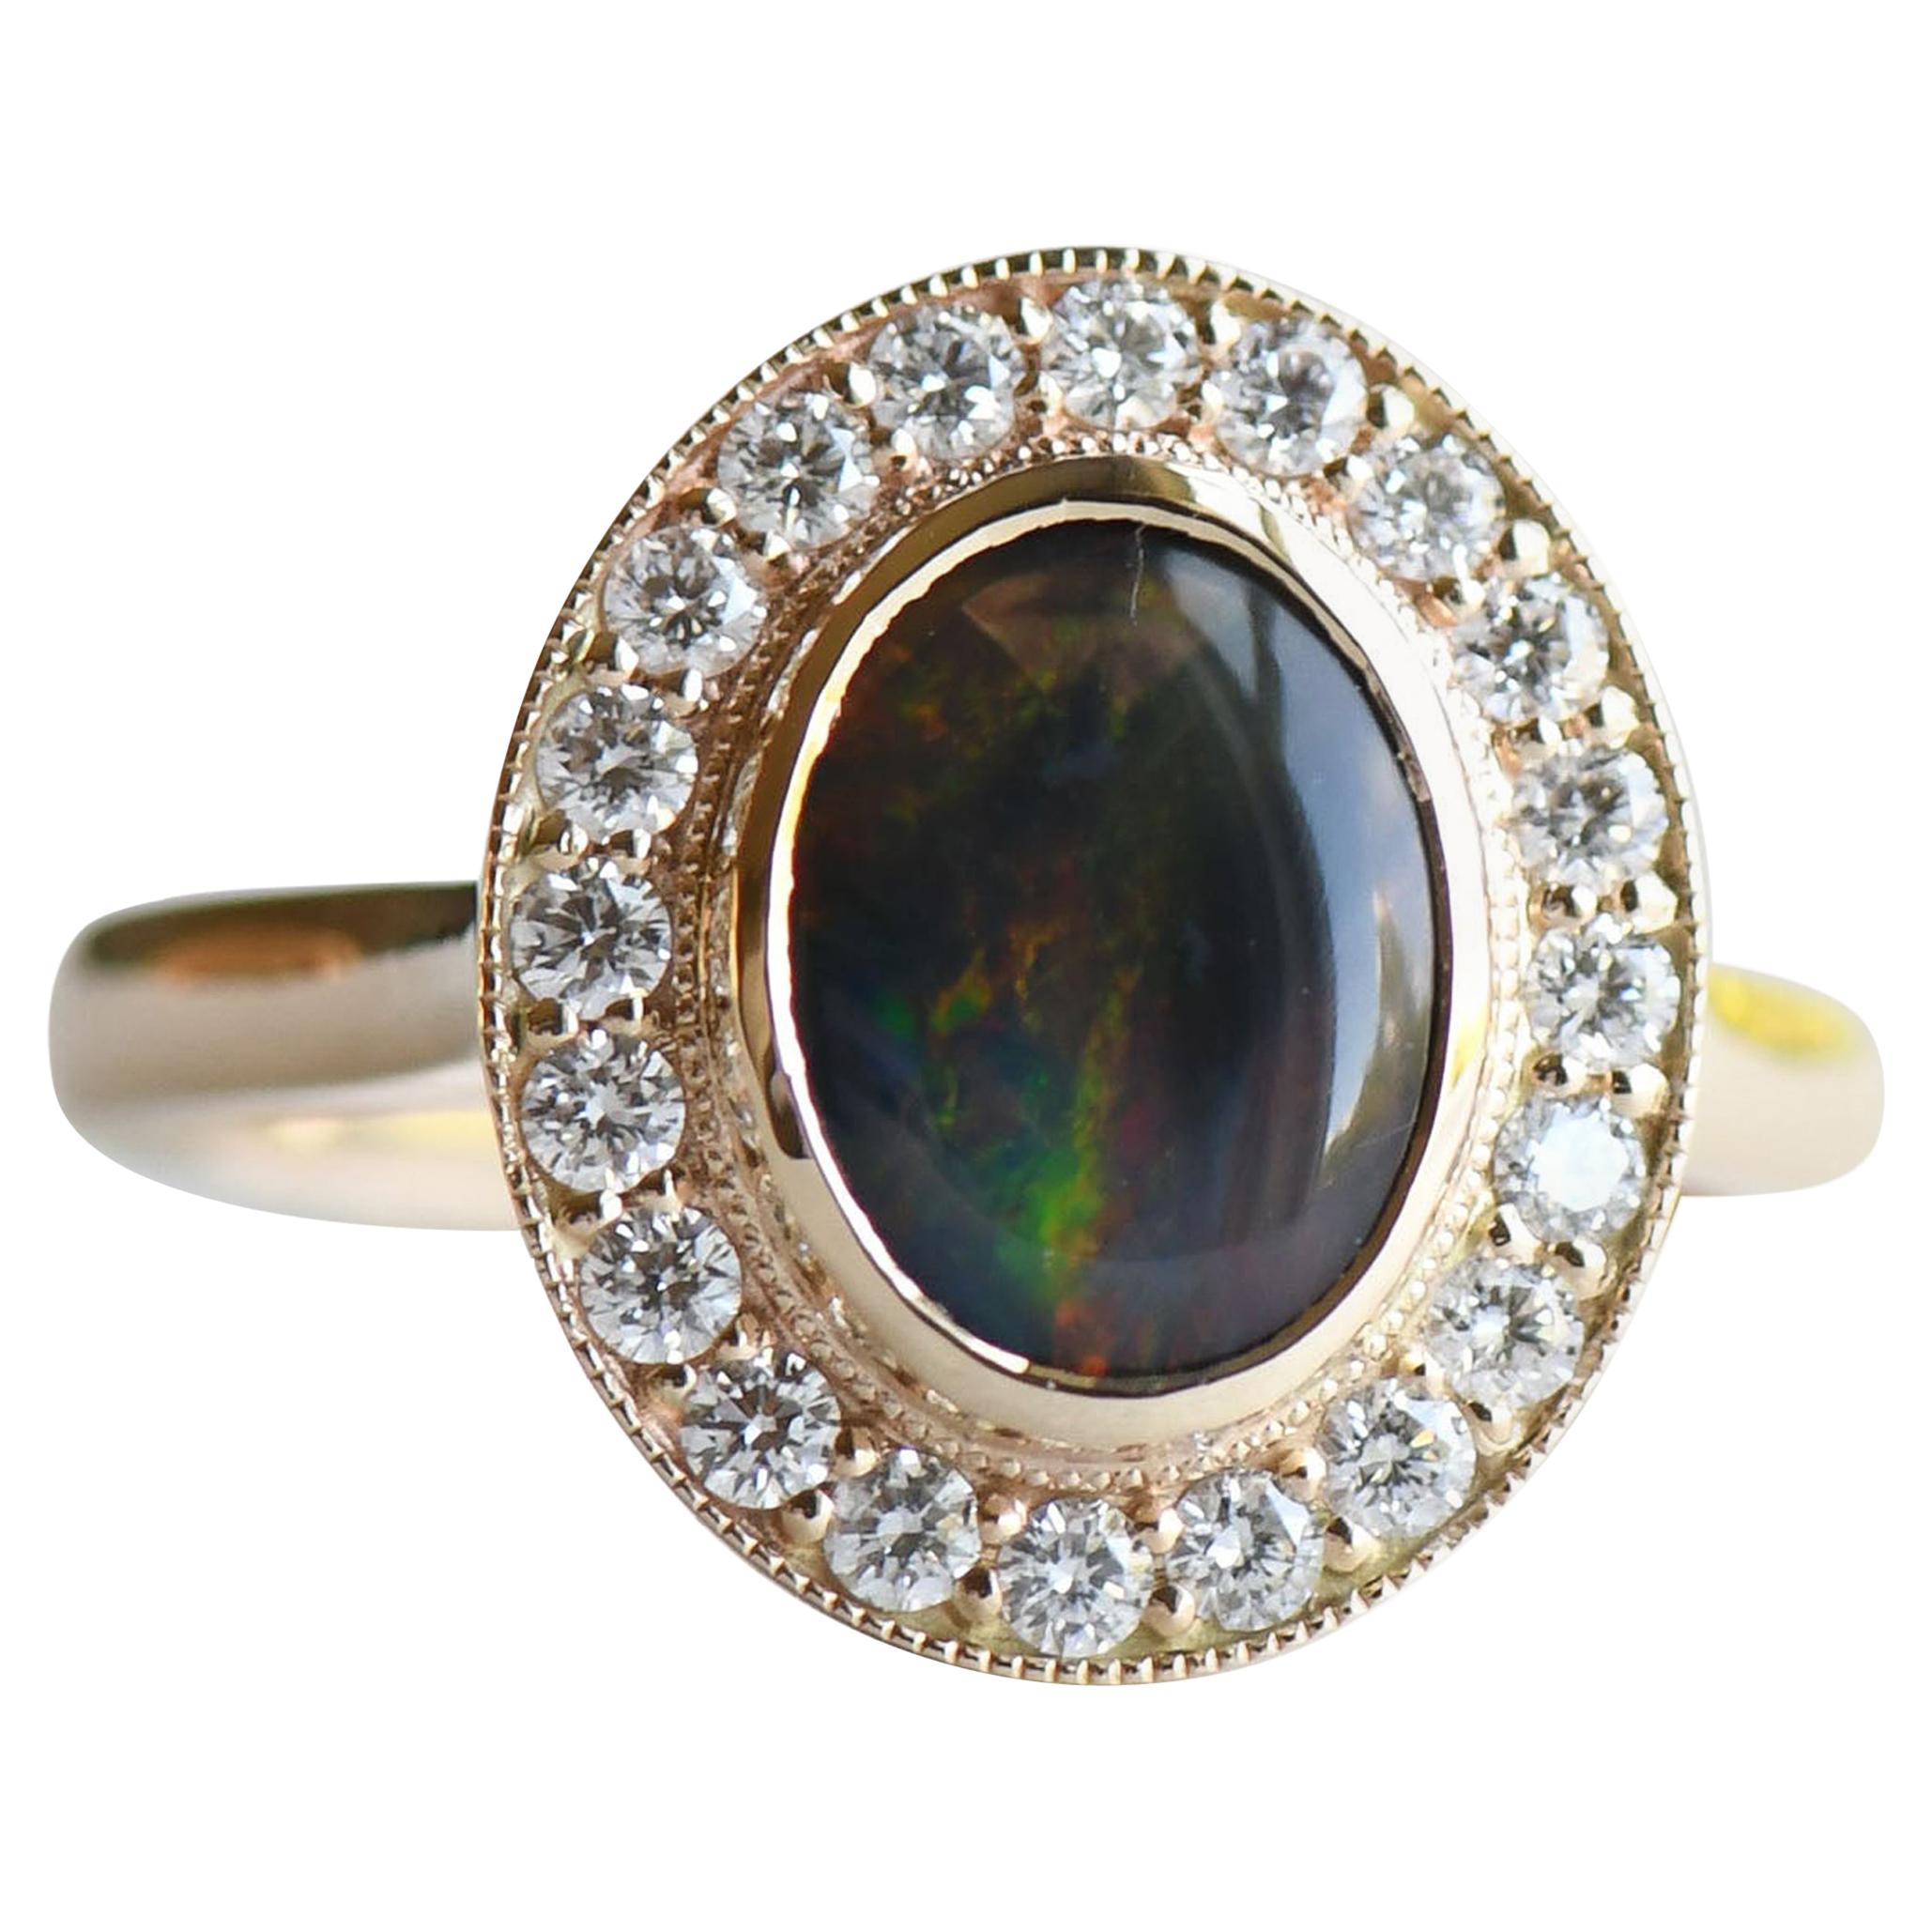 For Sale:  Australian Black Opal 1.188 Carat Ring, 14 Karat Gold Halo Ring